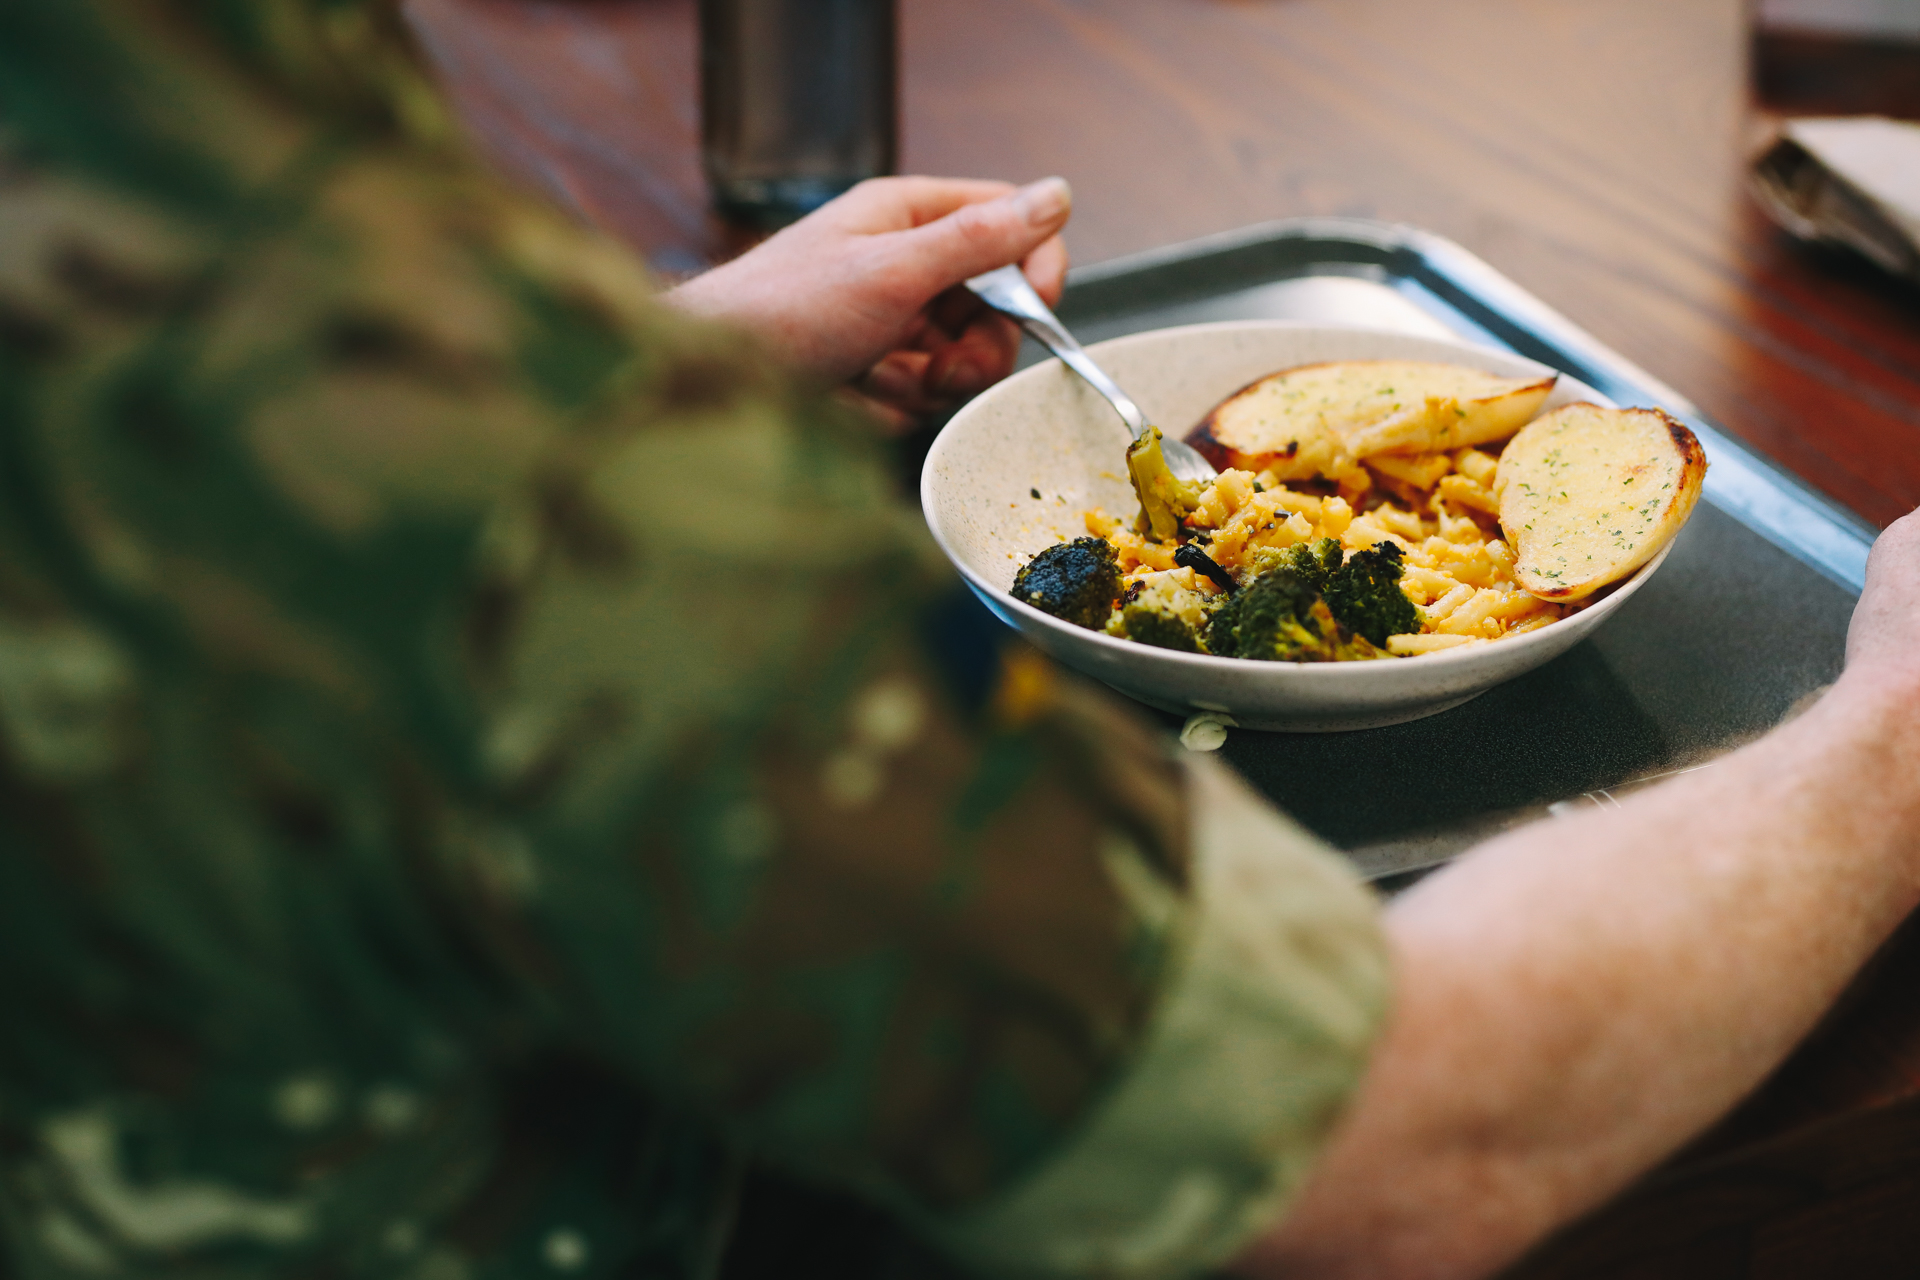 military eating food on base